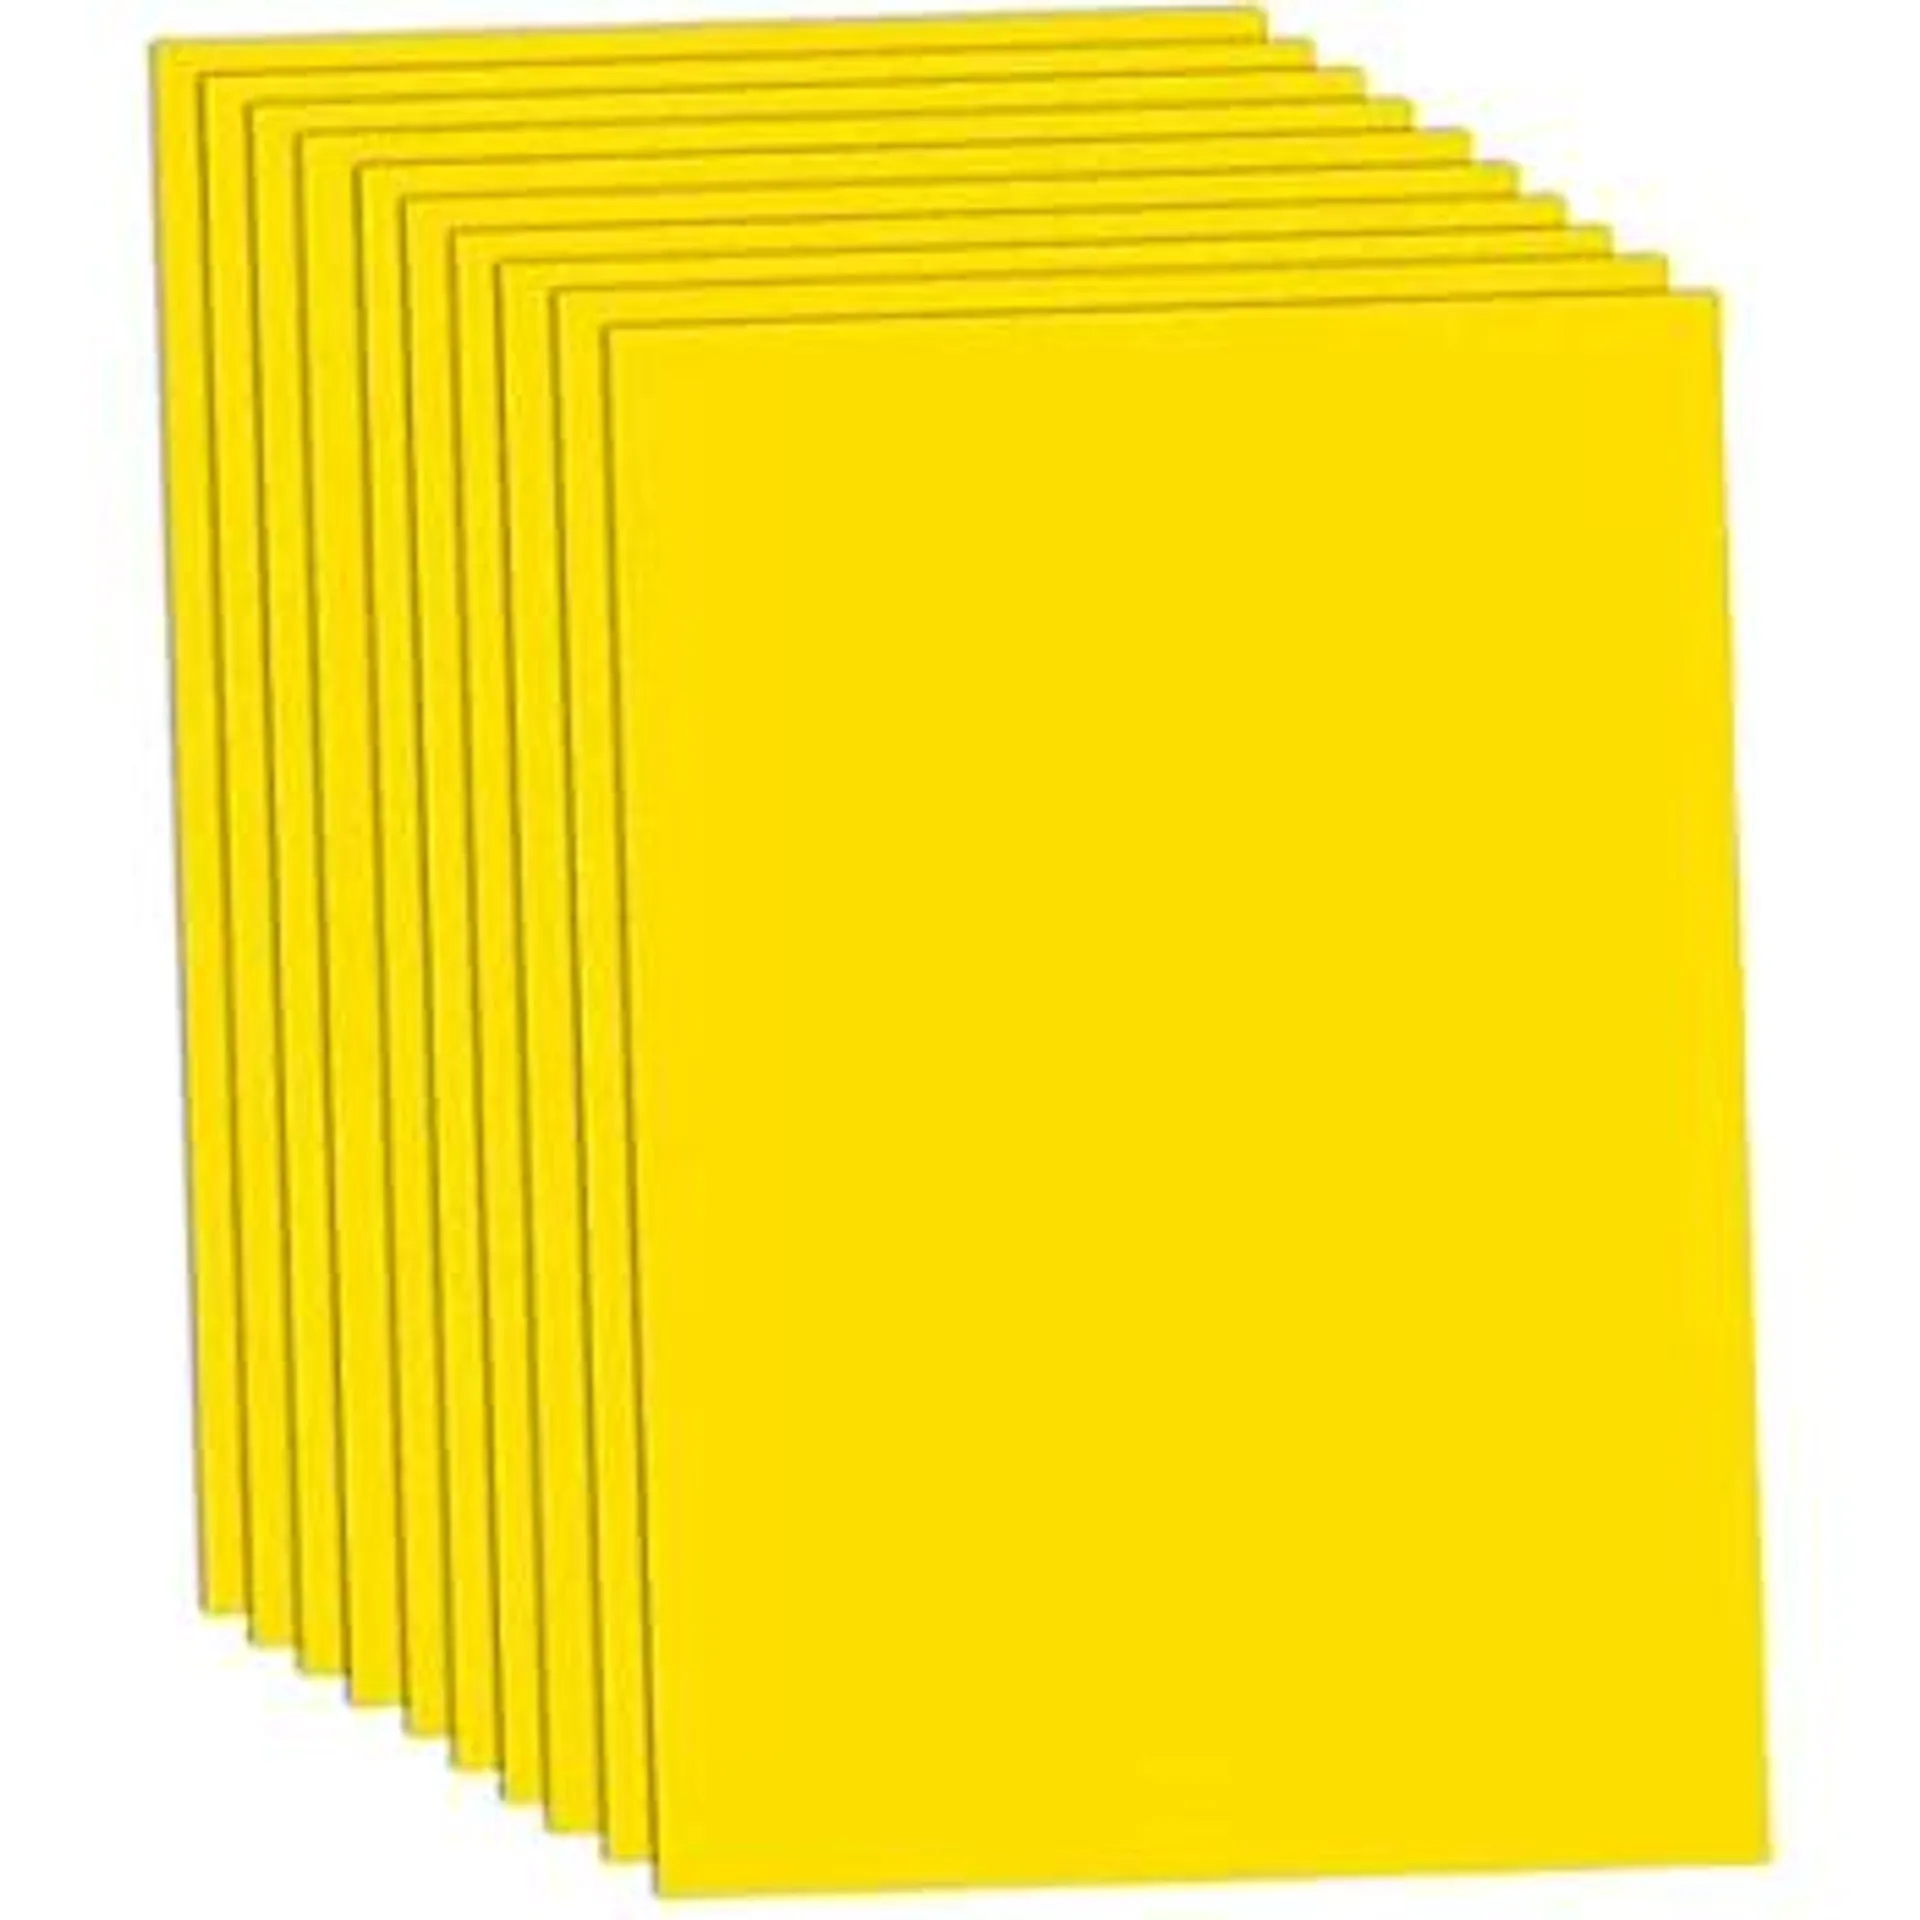 Fotokarton, gelb, 50 x 70 cm, 10 Blatt